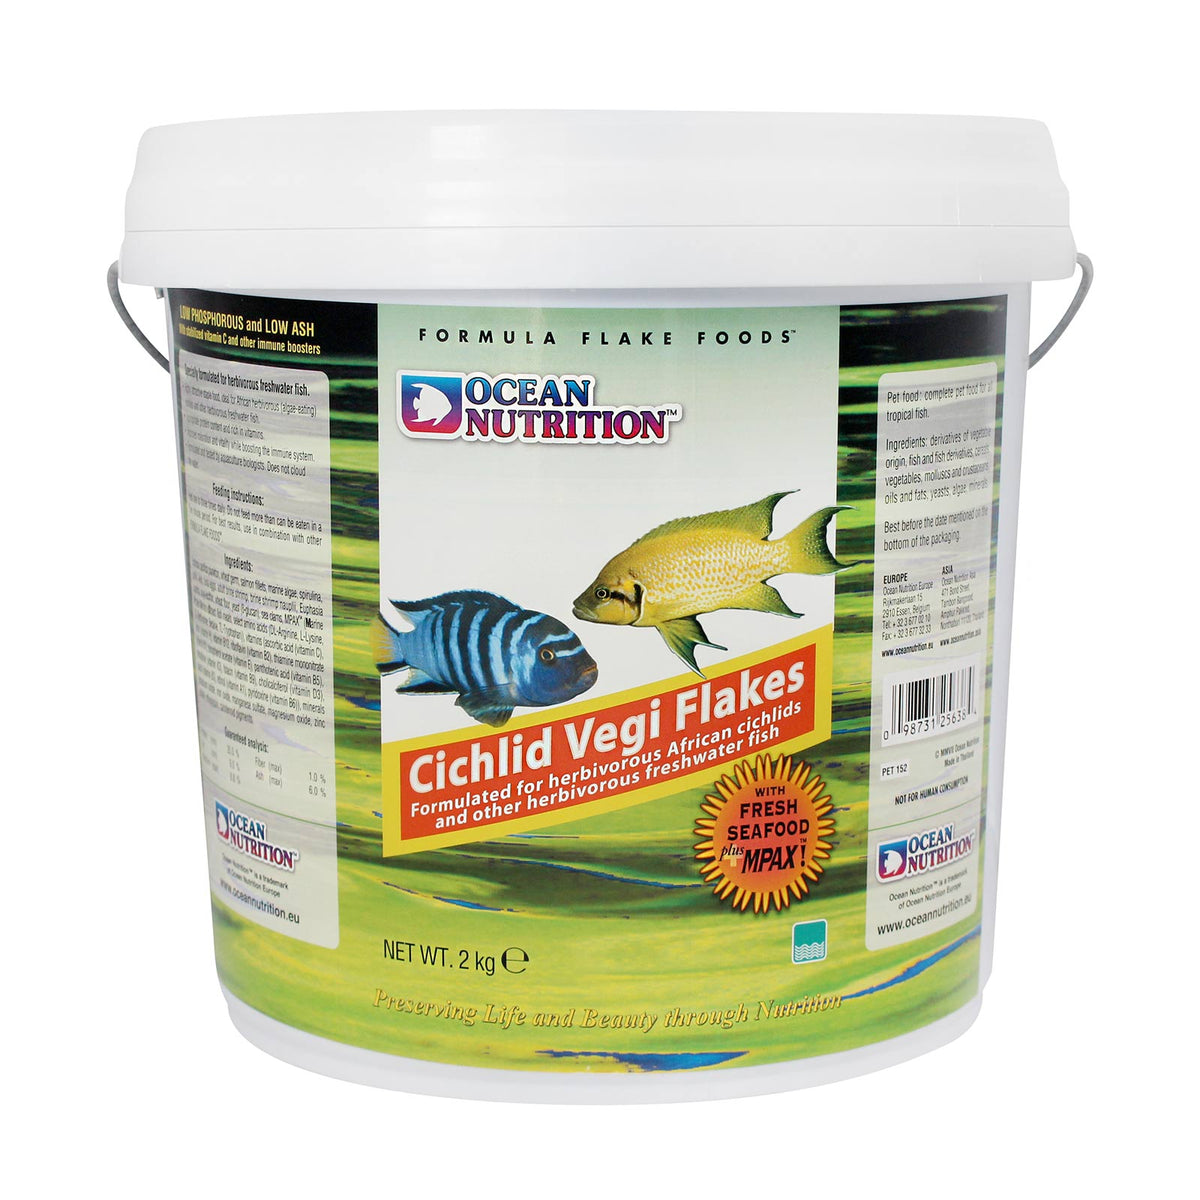 Ocean Nutrition Cichlid Vegi Flakes